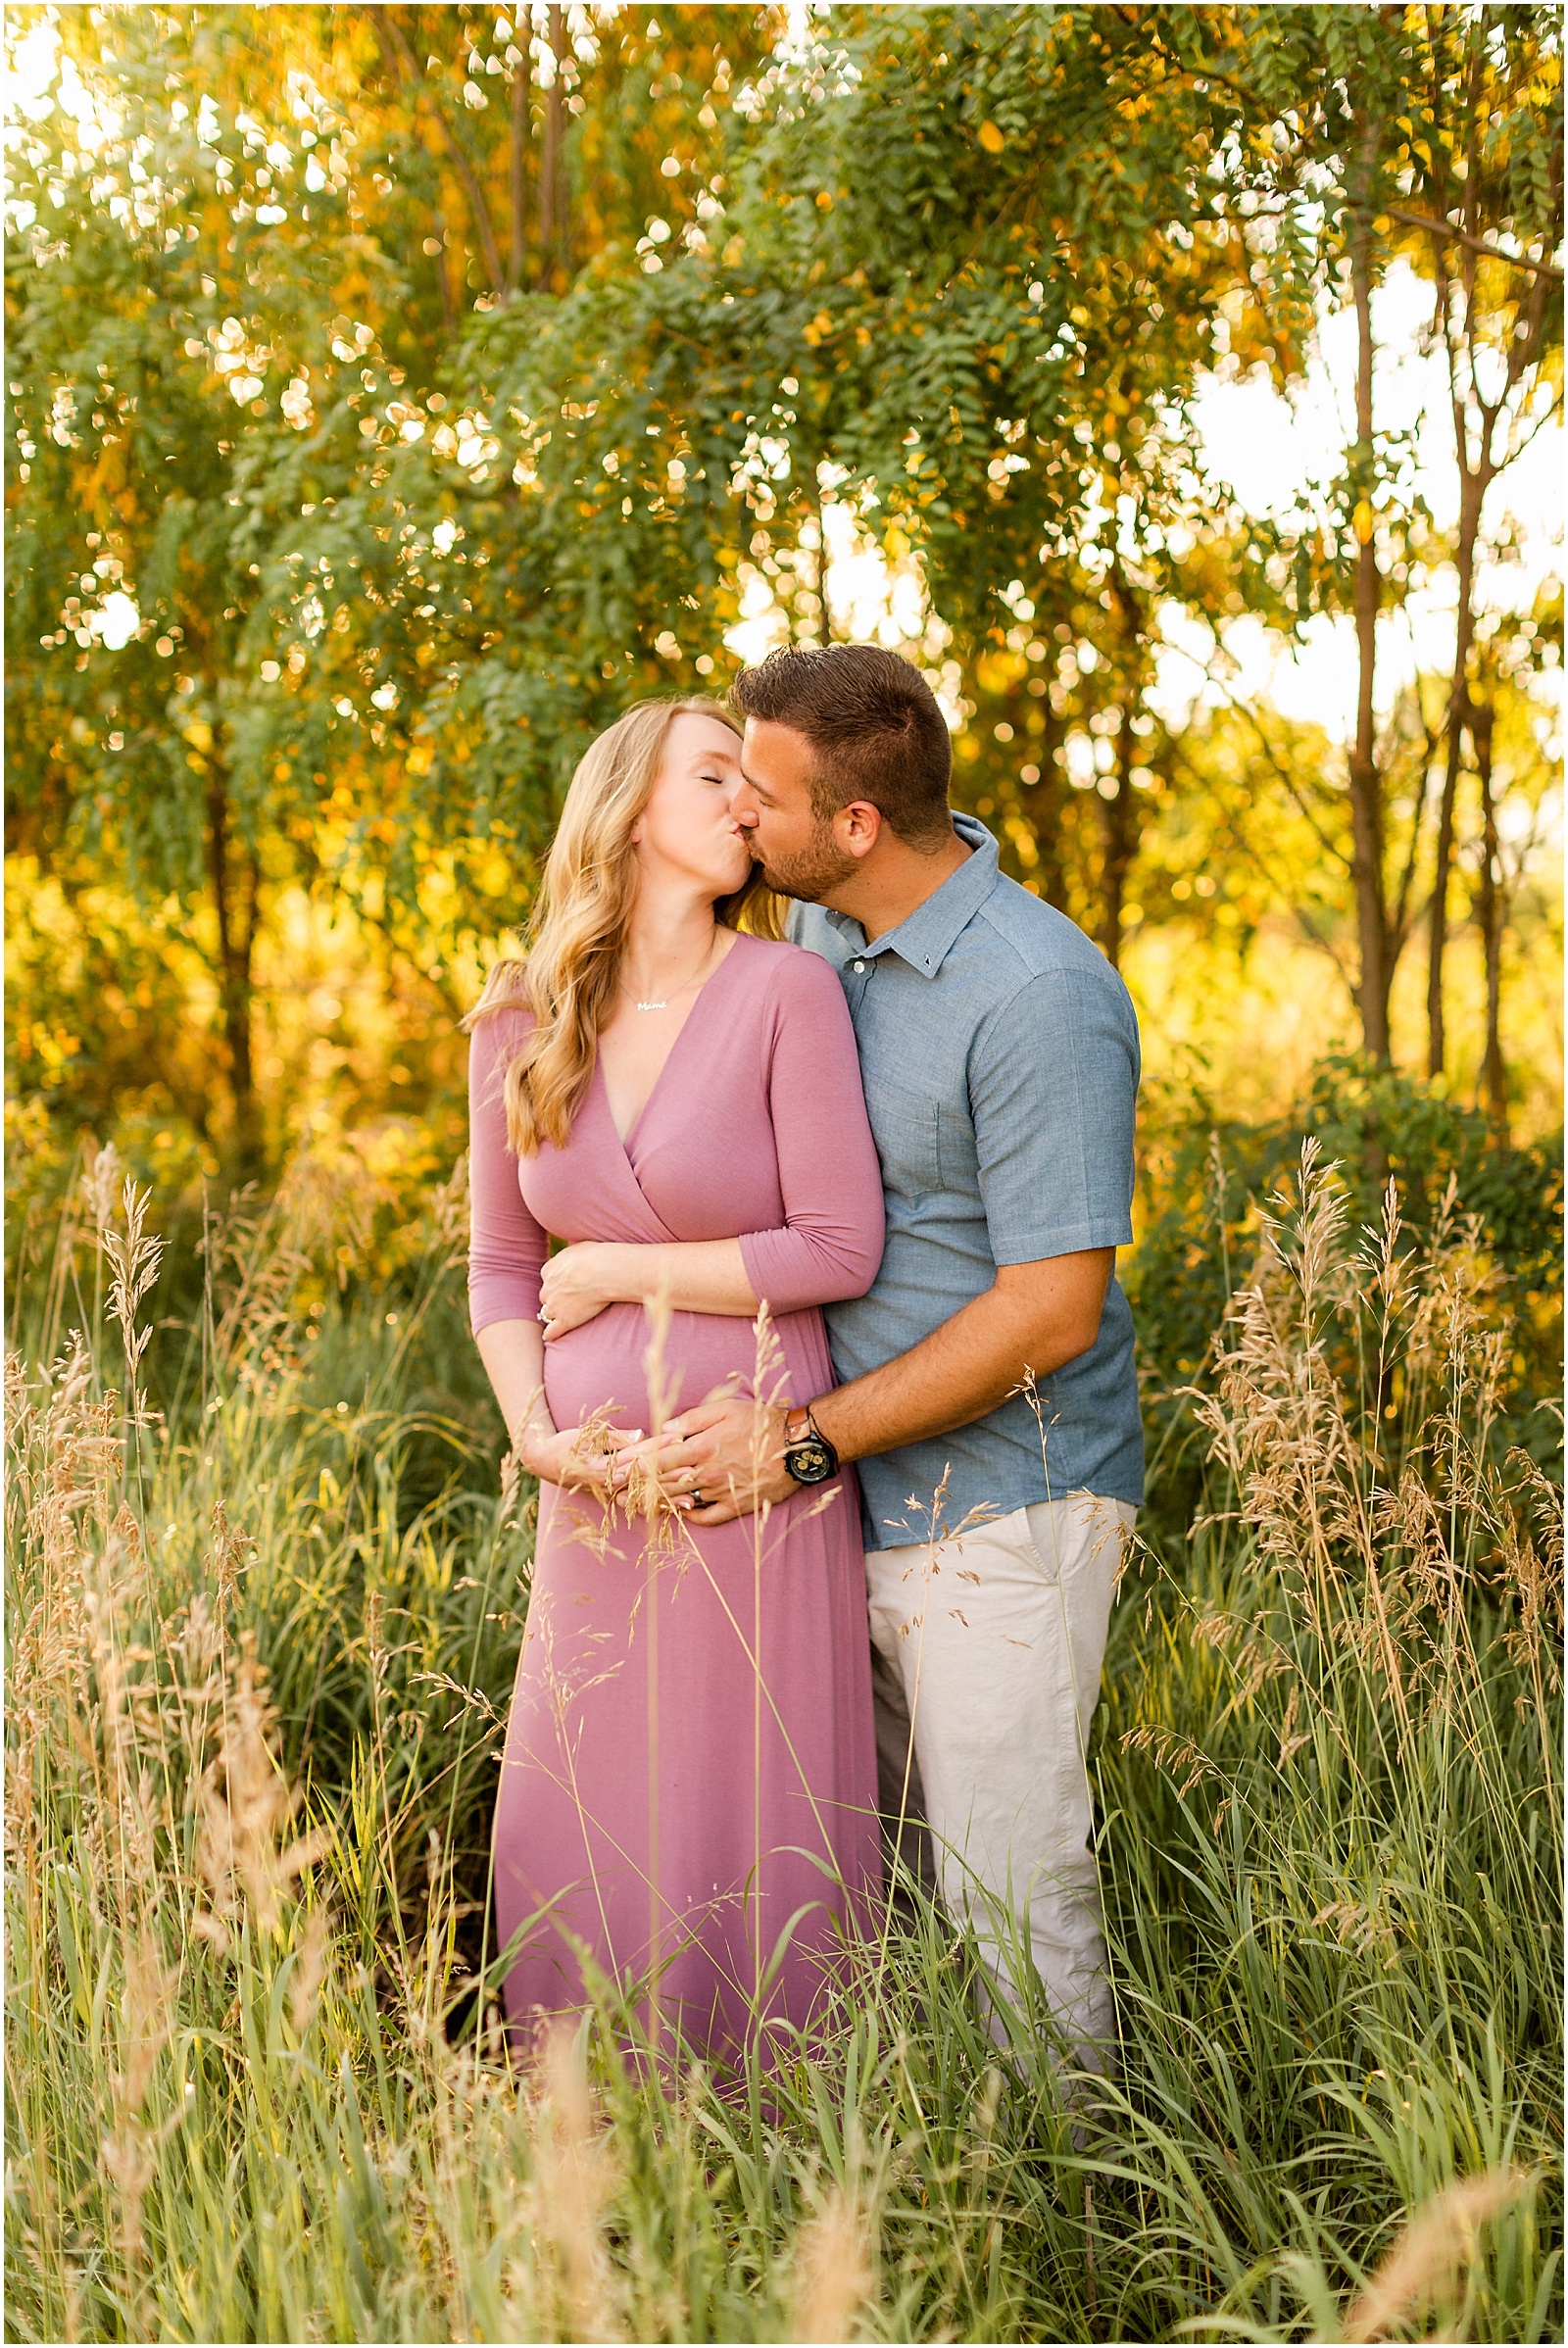 Ellen and Jake | Maternity Session Bret and Brandie | Evansville Photographers | @bretandbrandie-0014.jpg